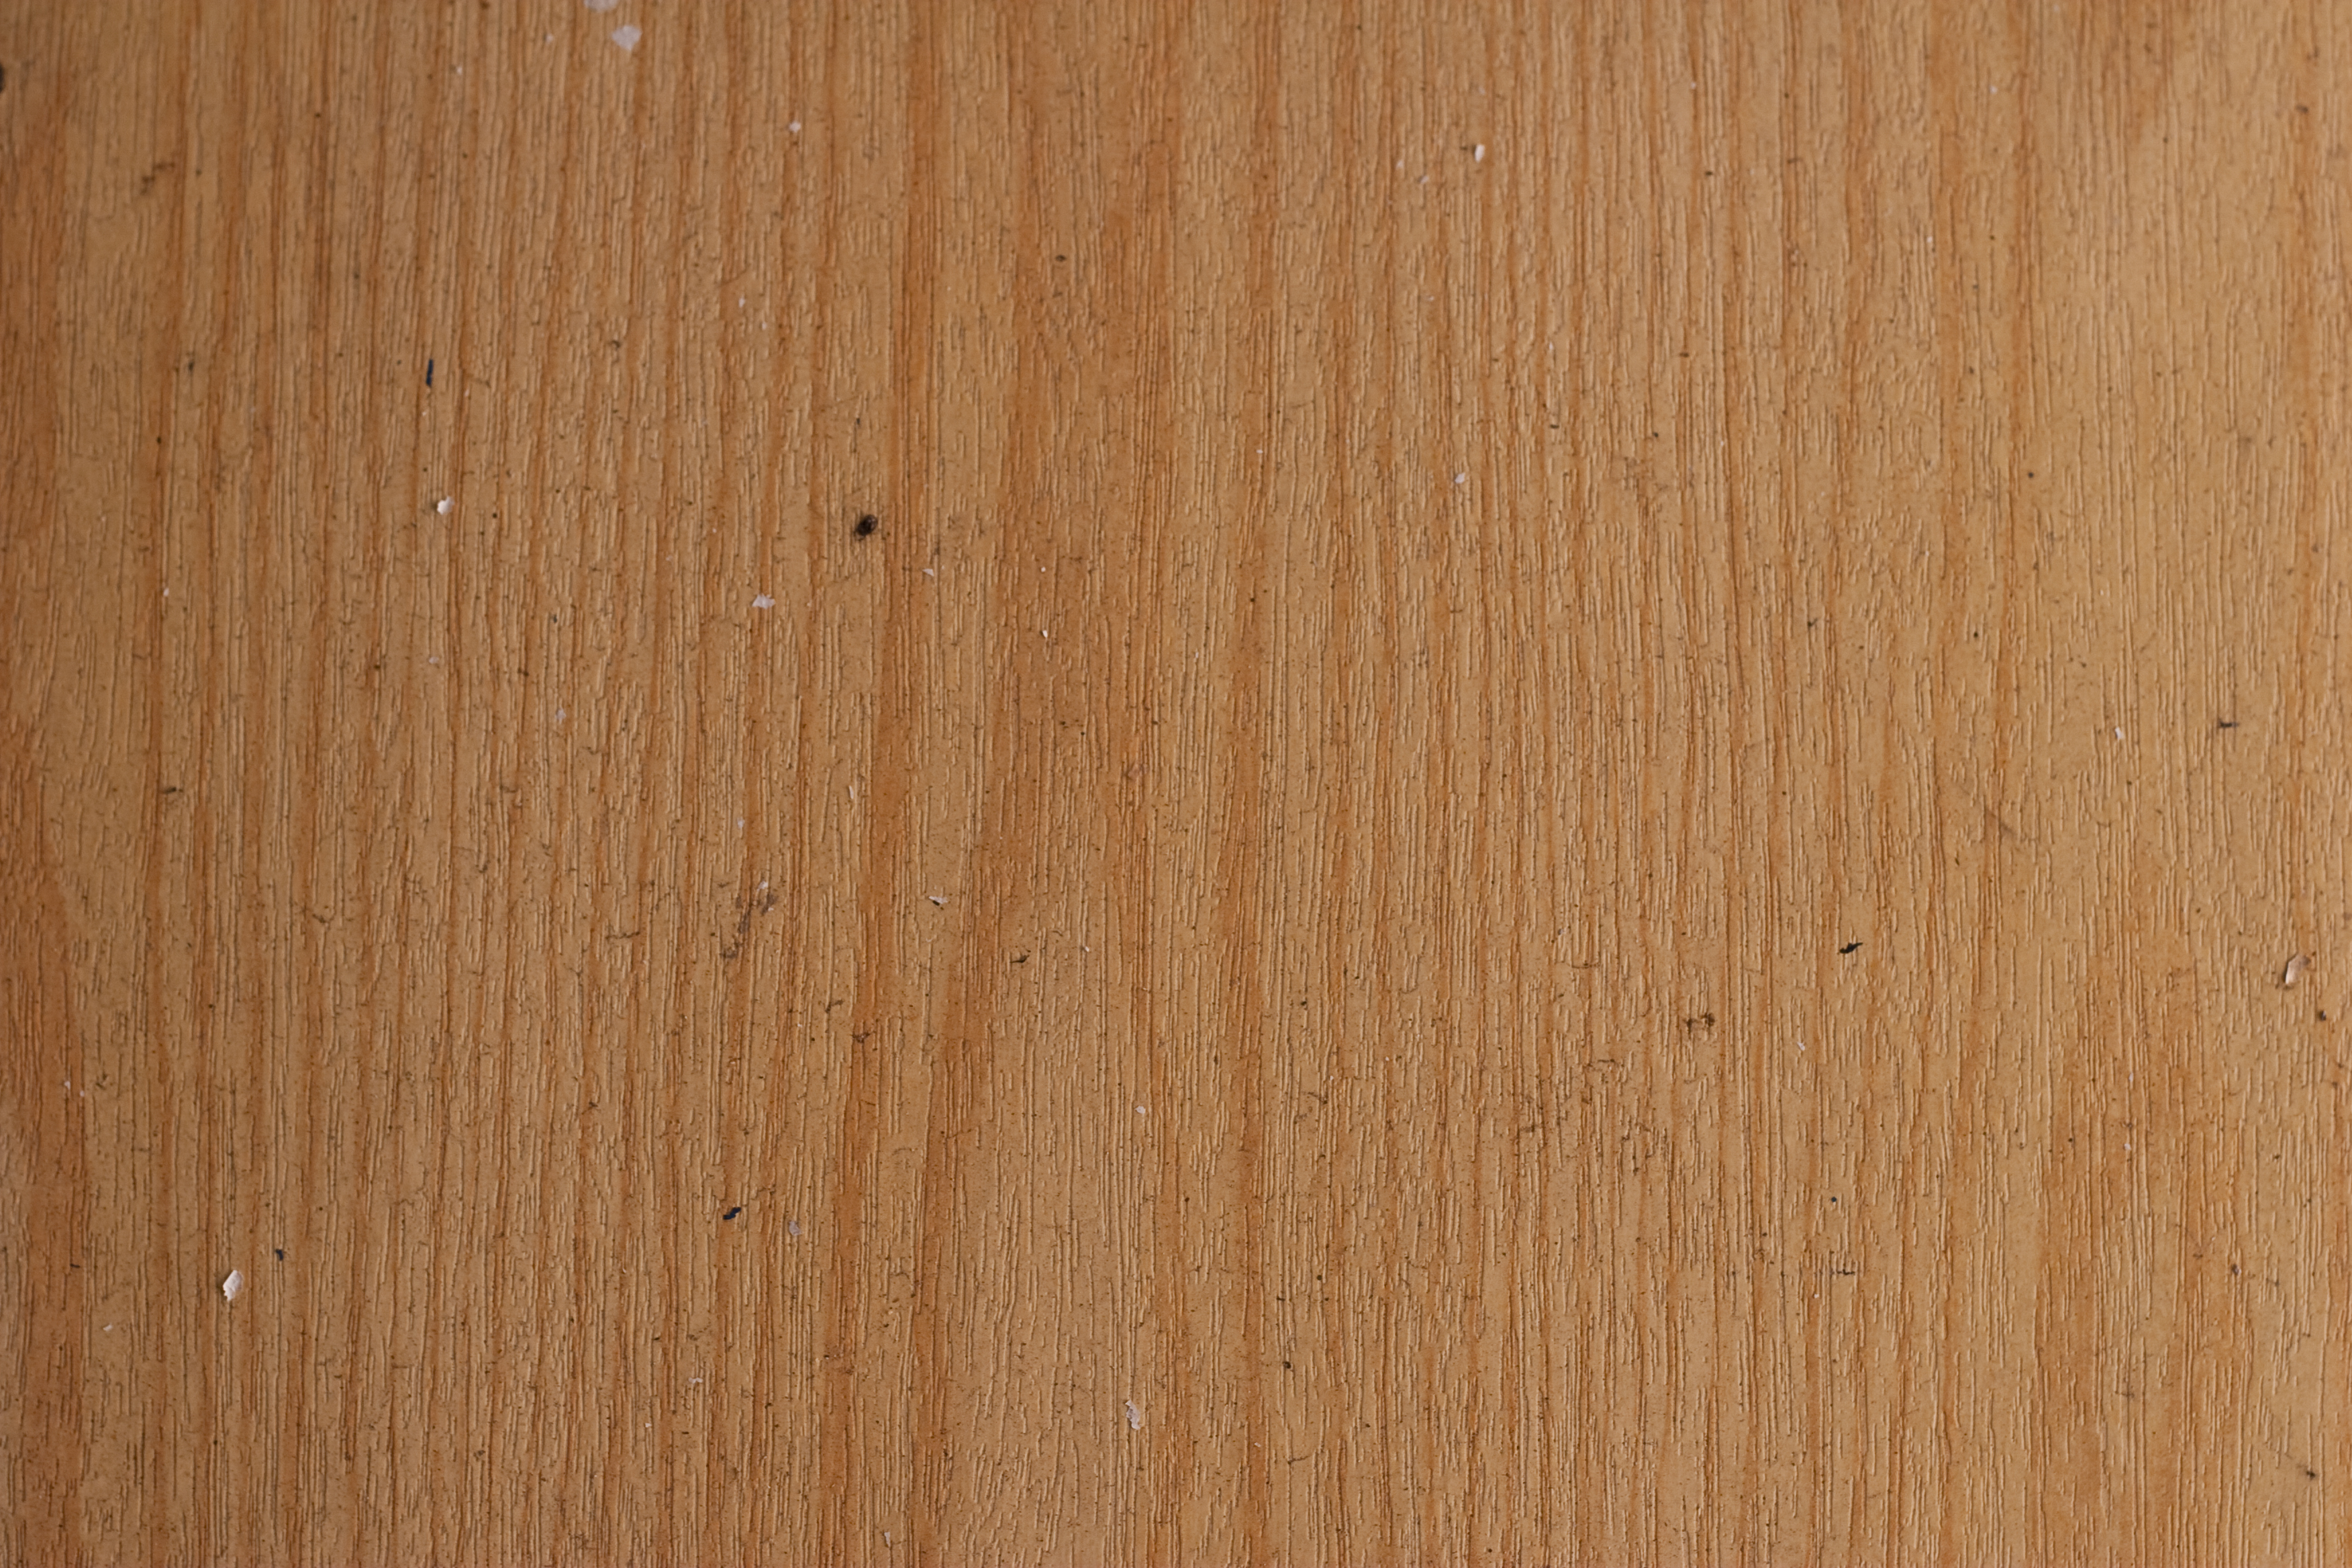 Wood Panel Texture, Board, Freetexturefrida, Panel, Surface, HQ Photo